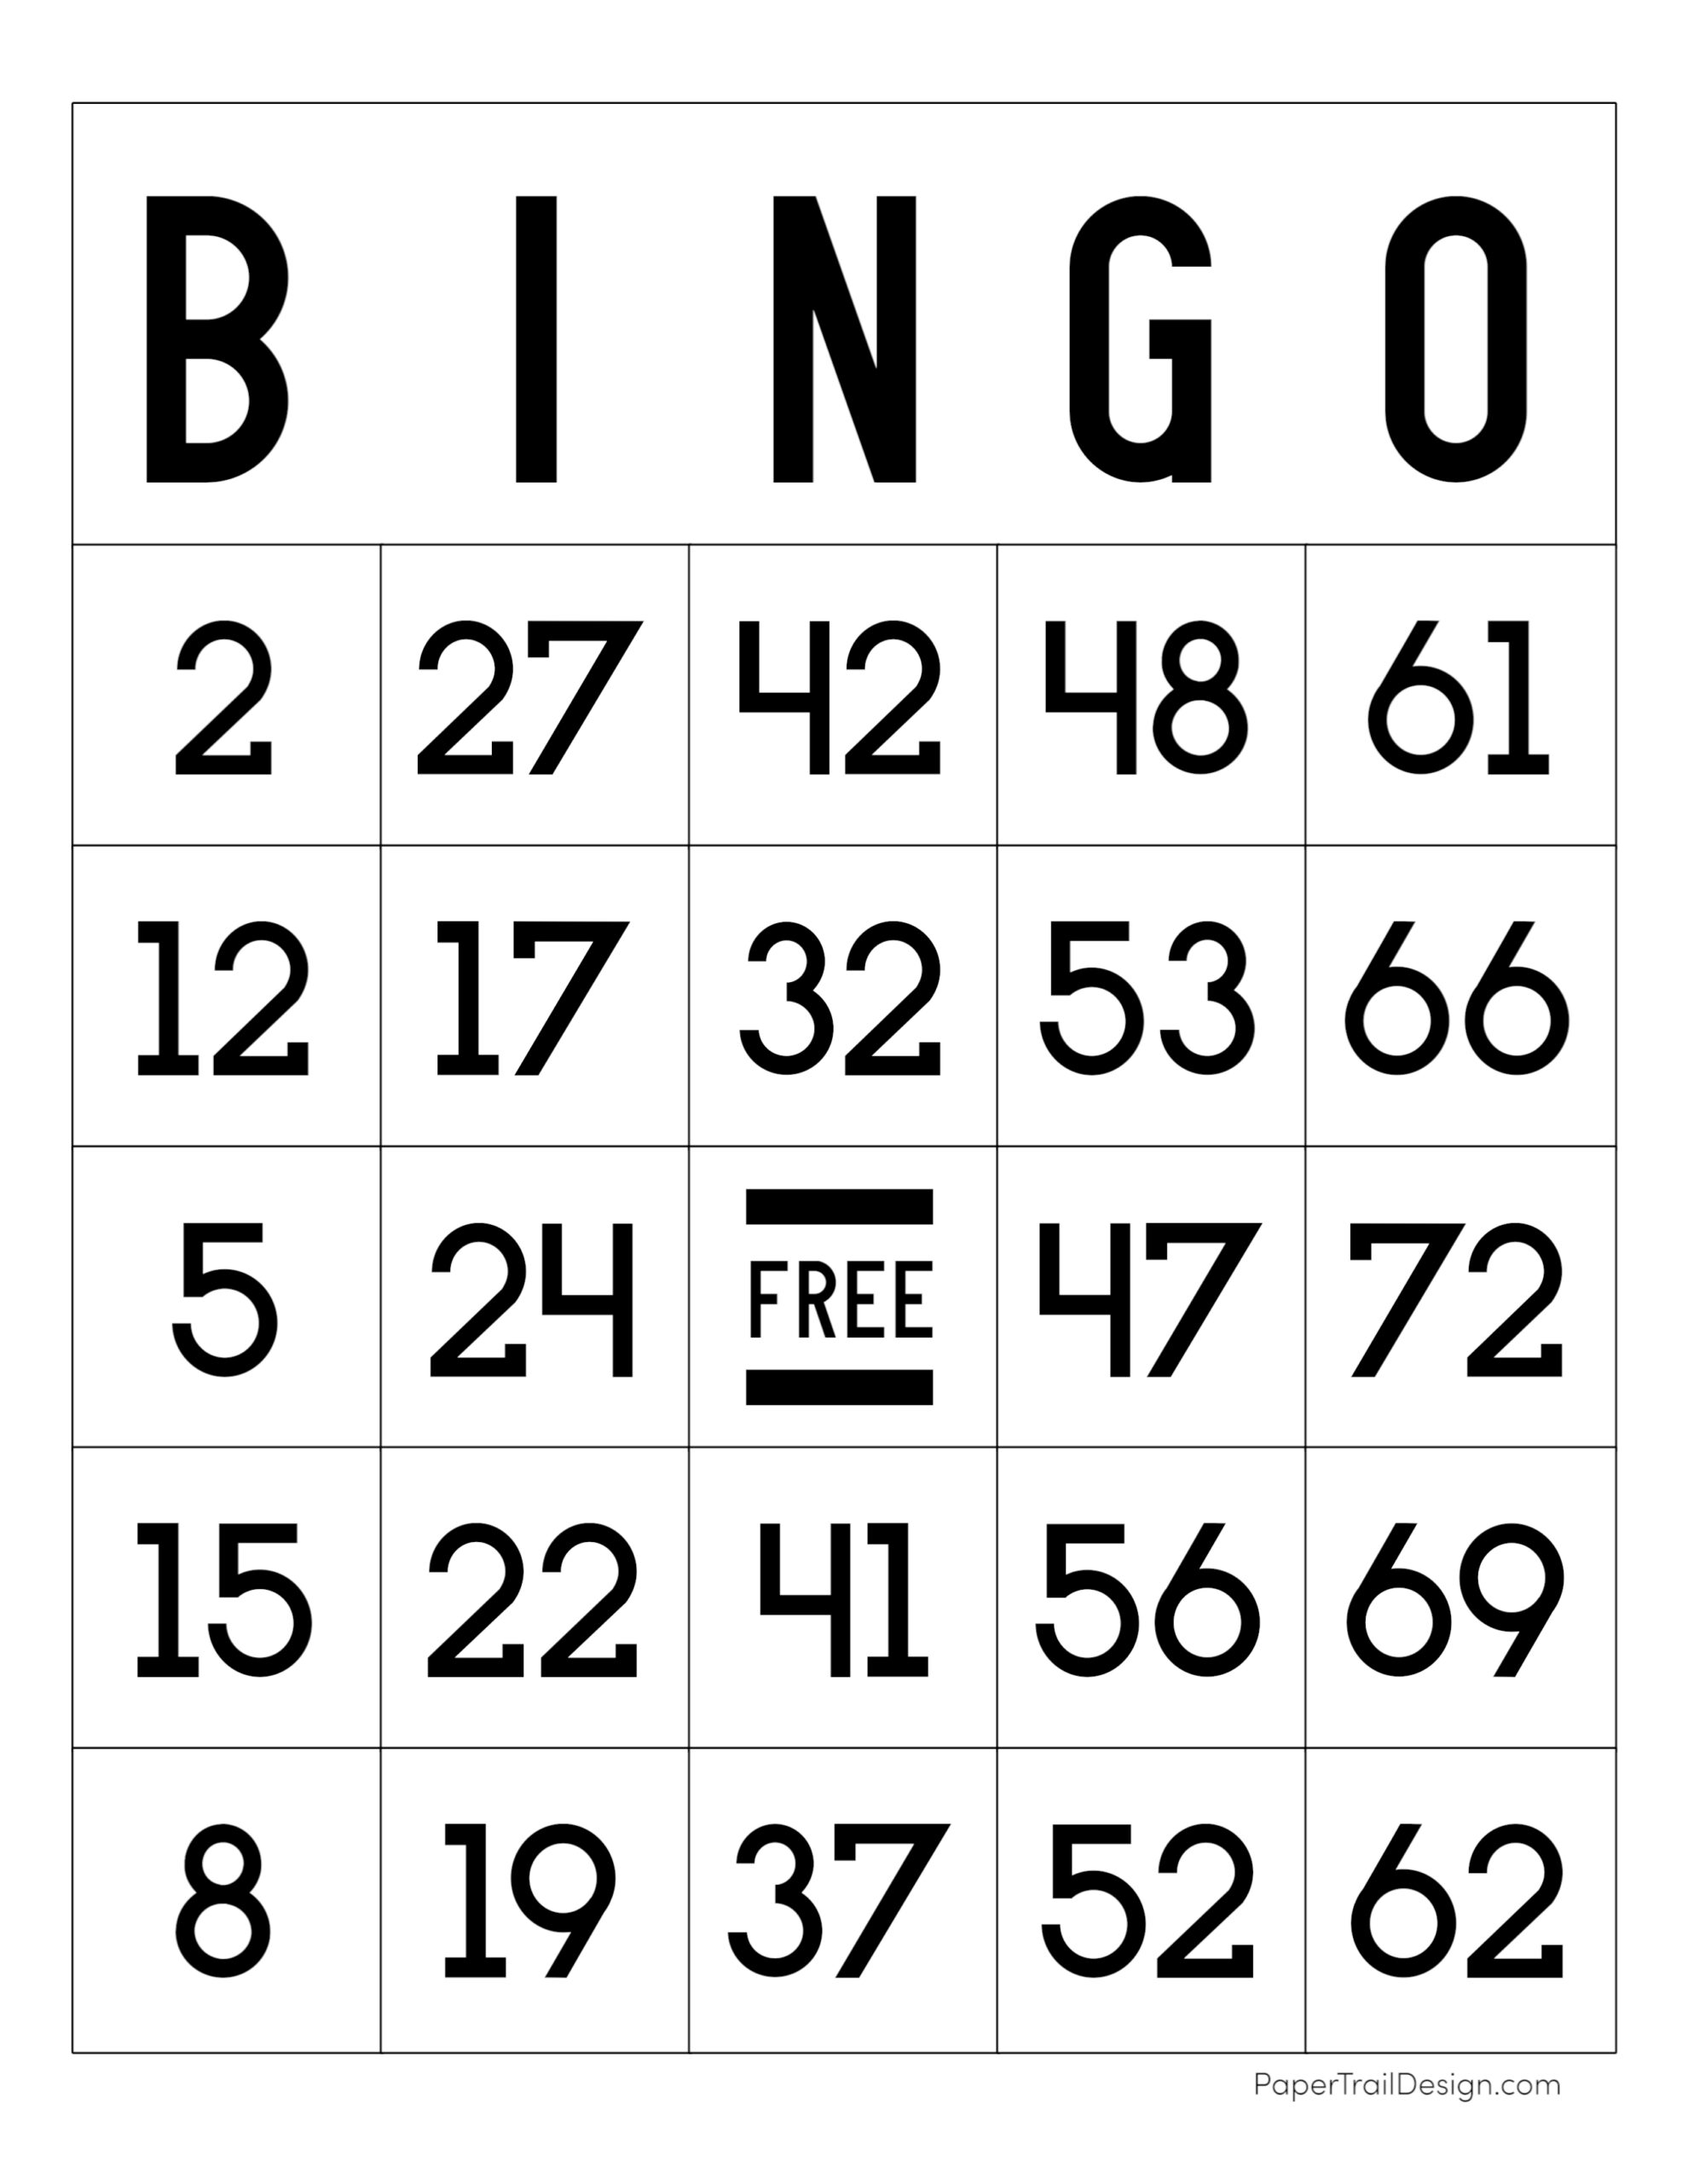 printable-bingo-cards-4-to-a-page-printable-bingo-cards-riset